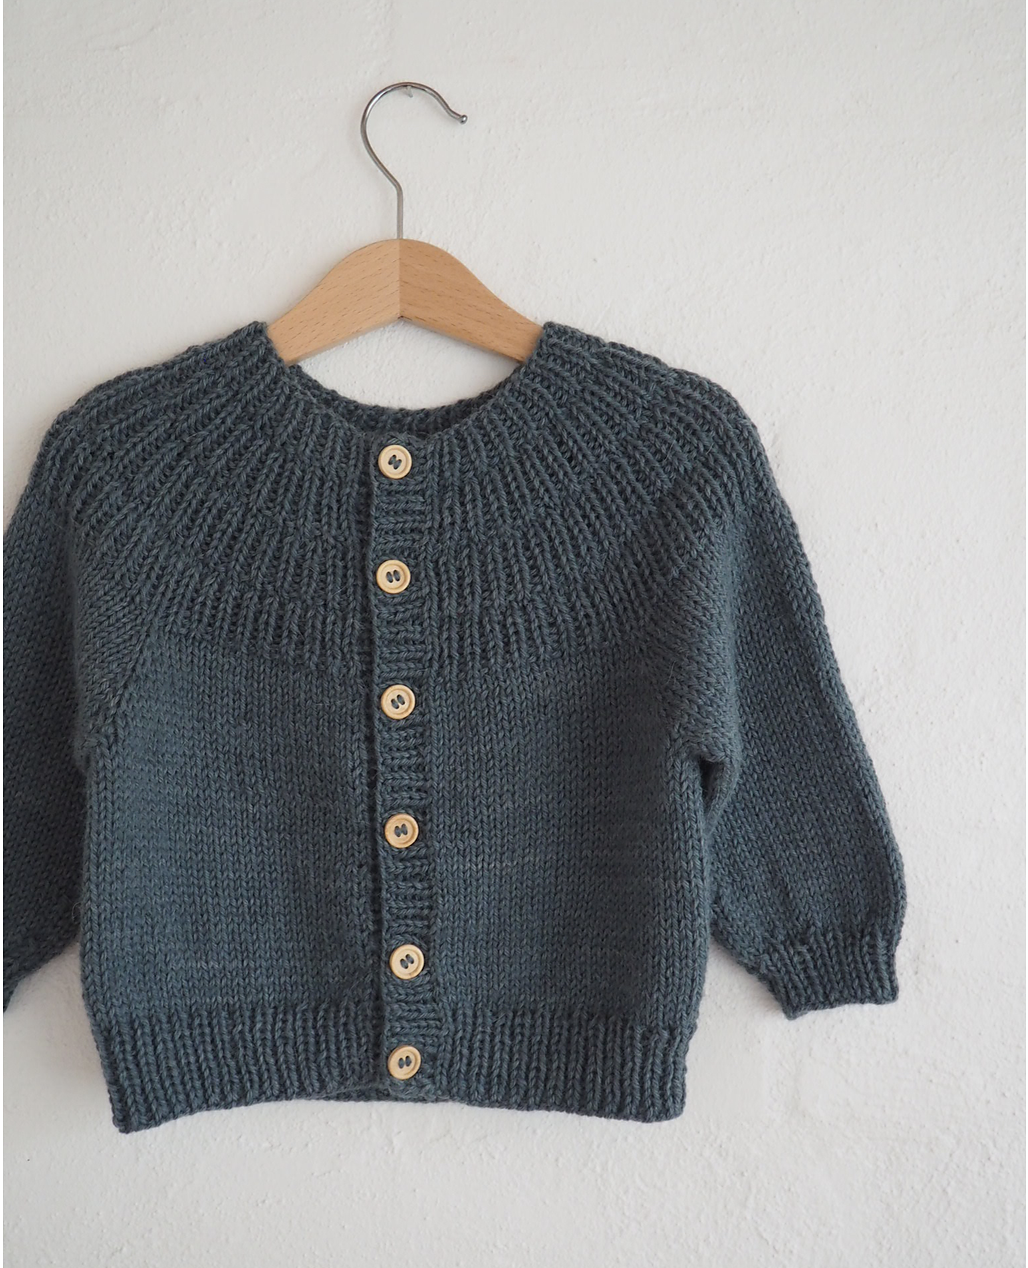 Anker's Jacket Junior - Petite Knit. Knitting Pattern – Miss Maude